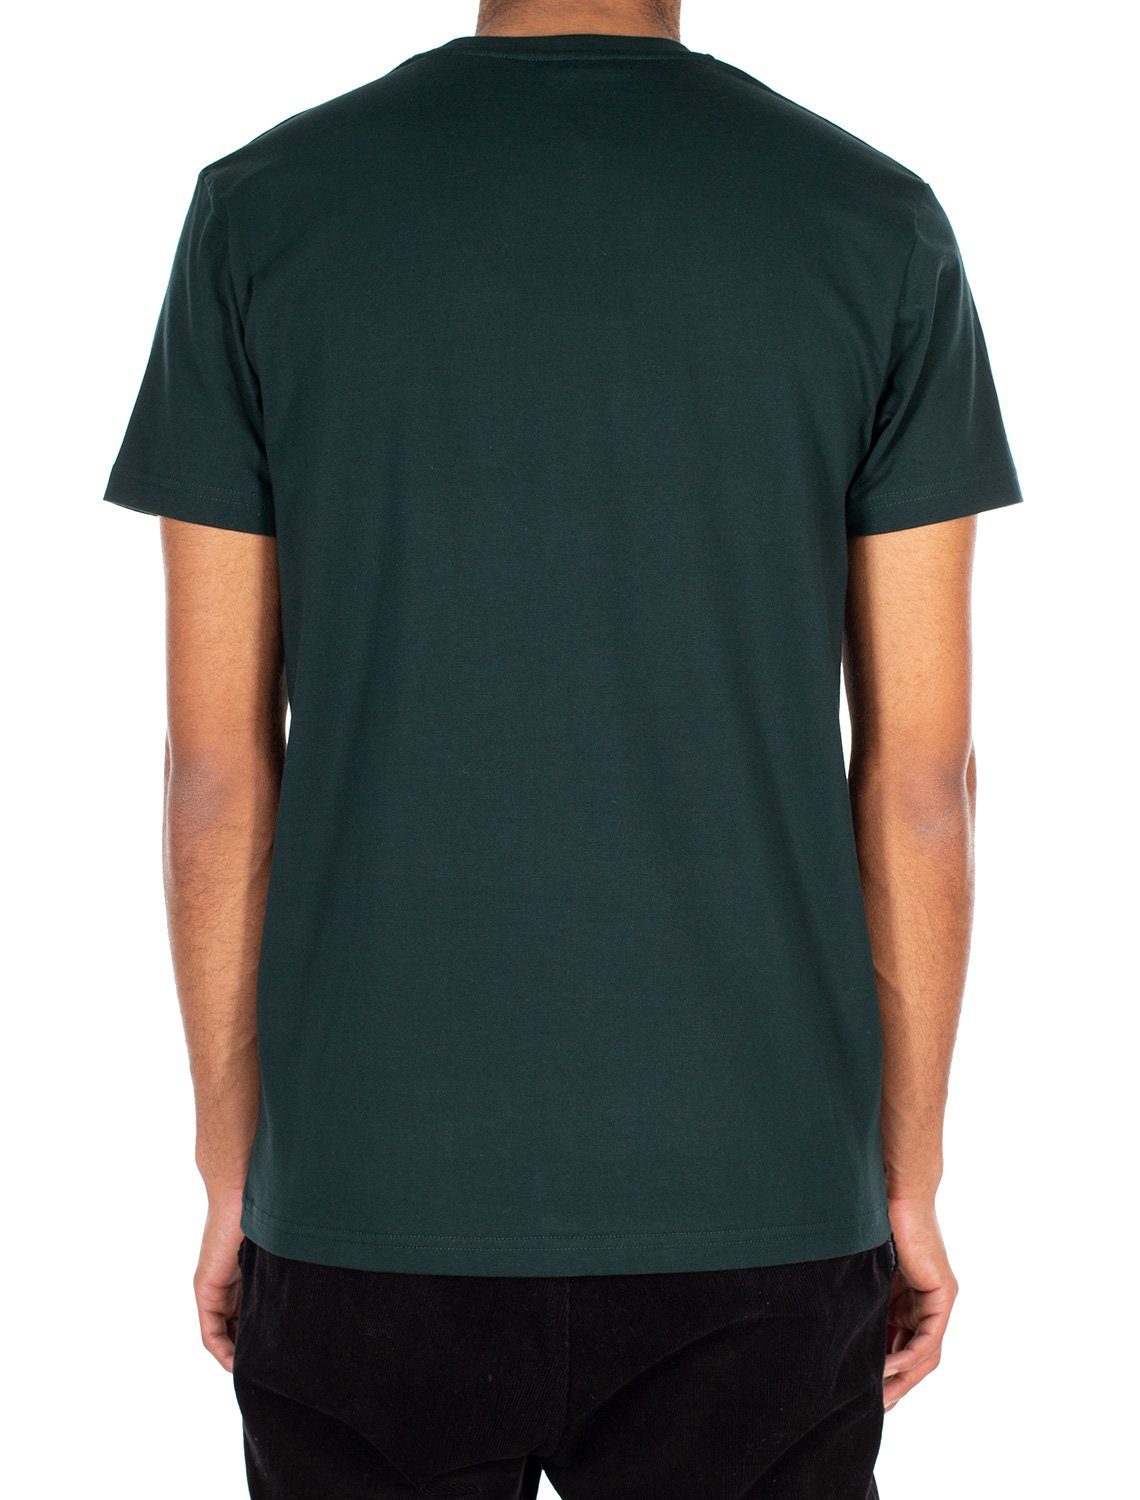 nightforest Iriedaily Emb Nutcracx iriedaily T-Shirt T-Shirt